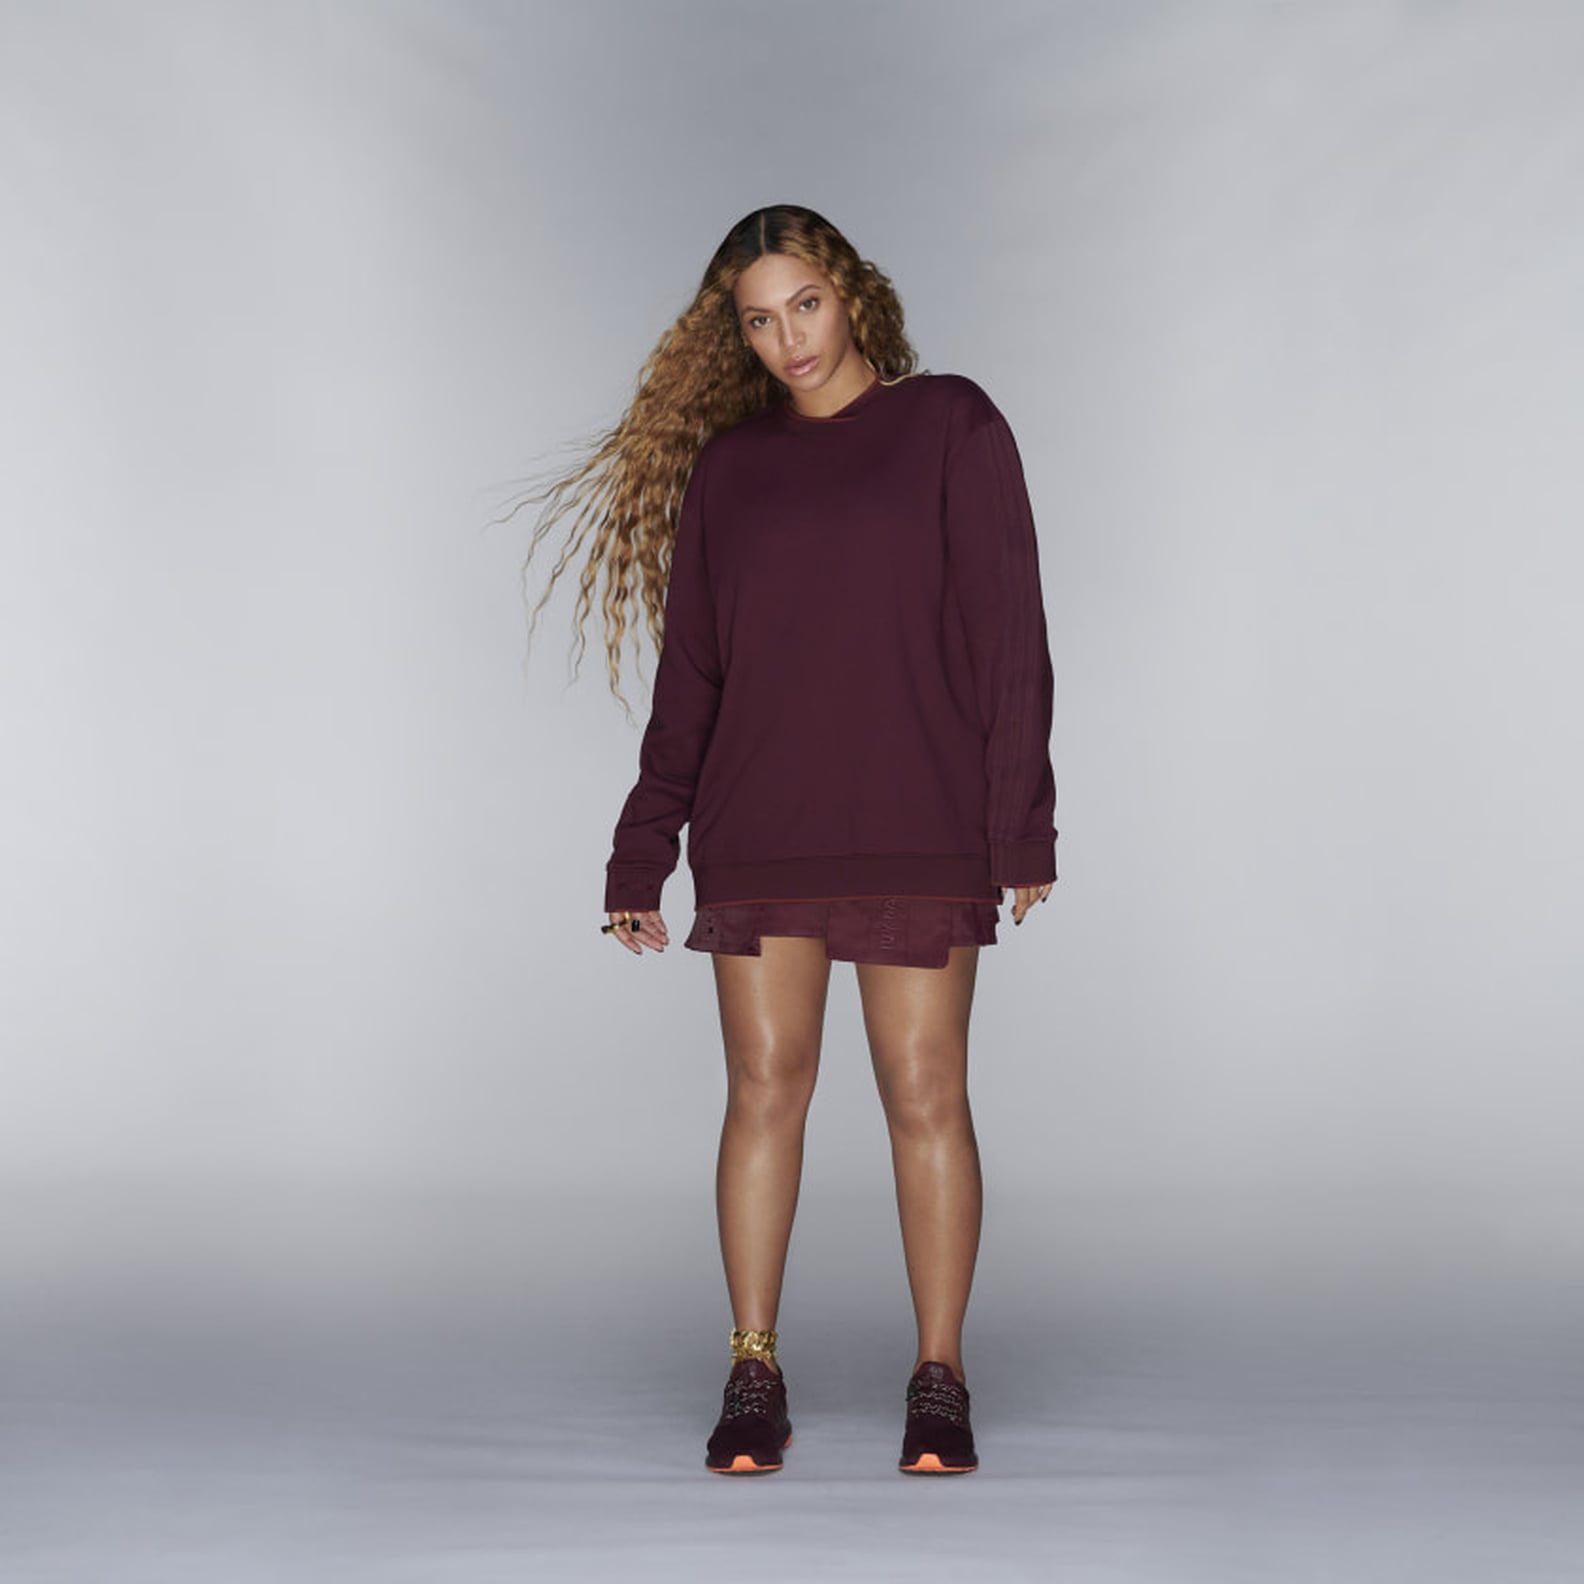 Beyoncé Knowles's Ivy Park x Adidas Collaboration | POPSUGAR Fashion